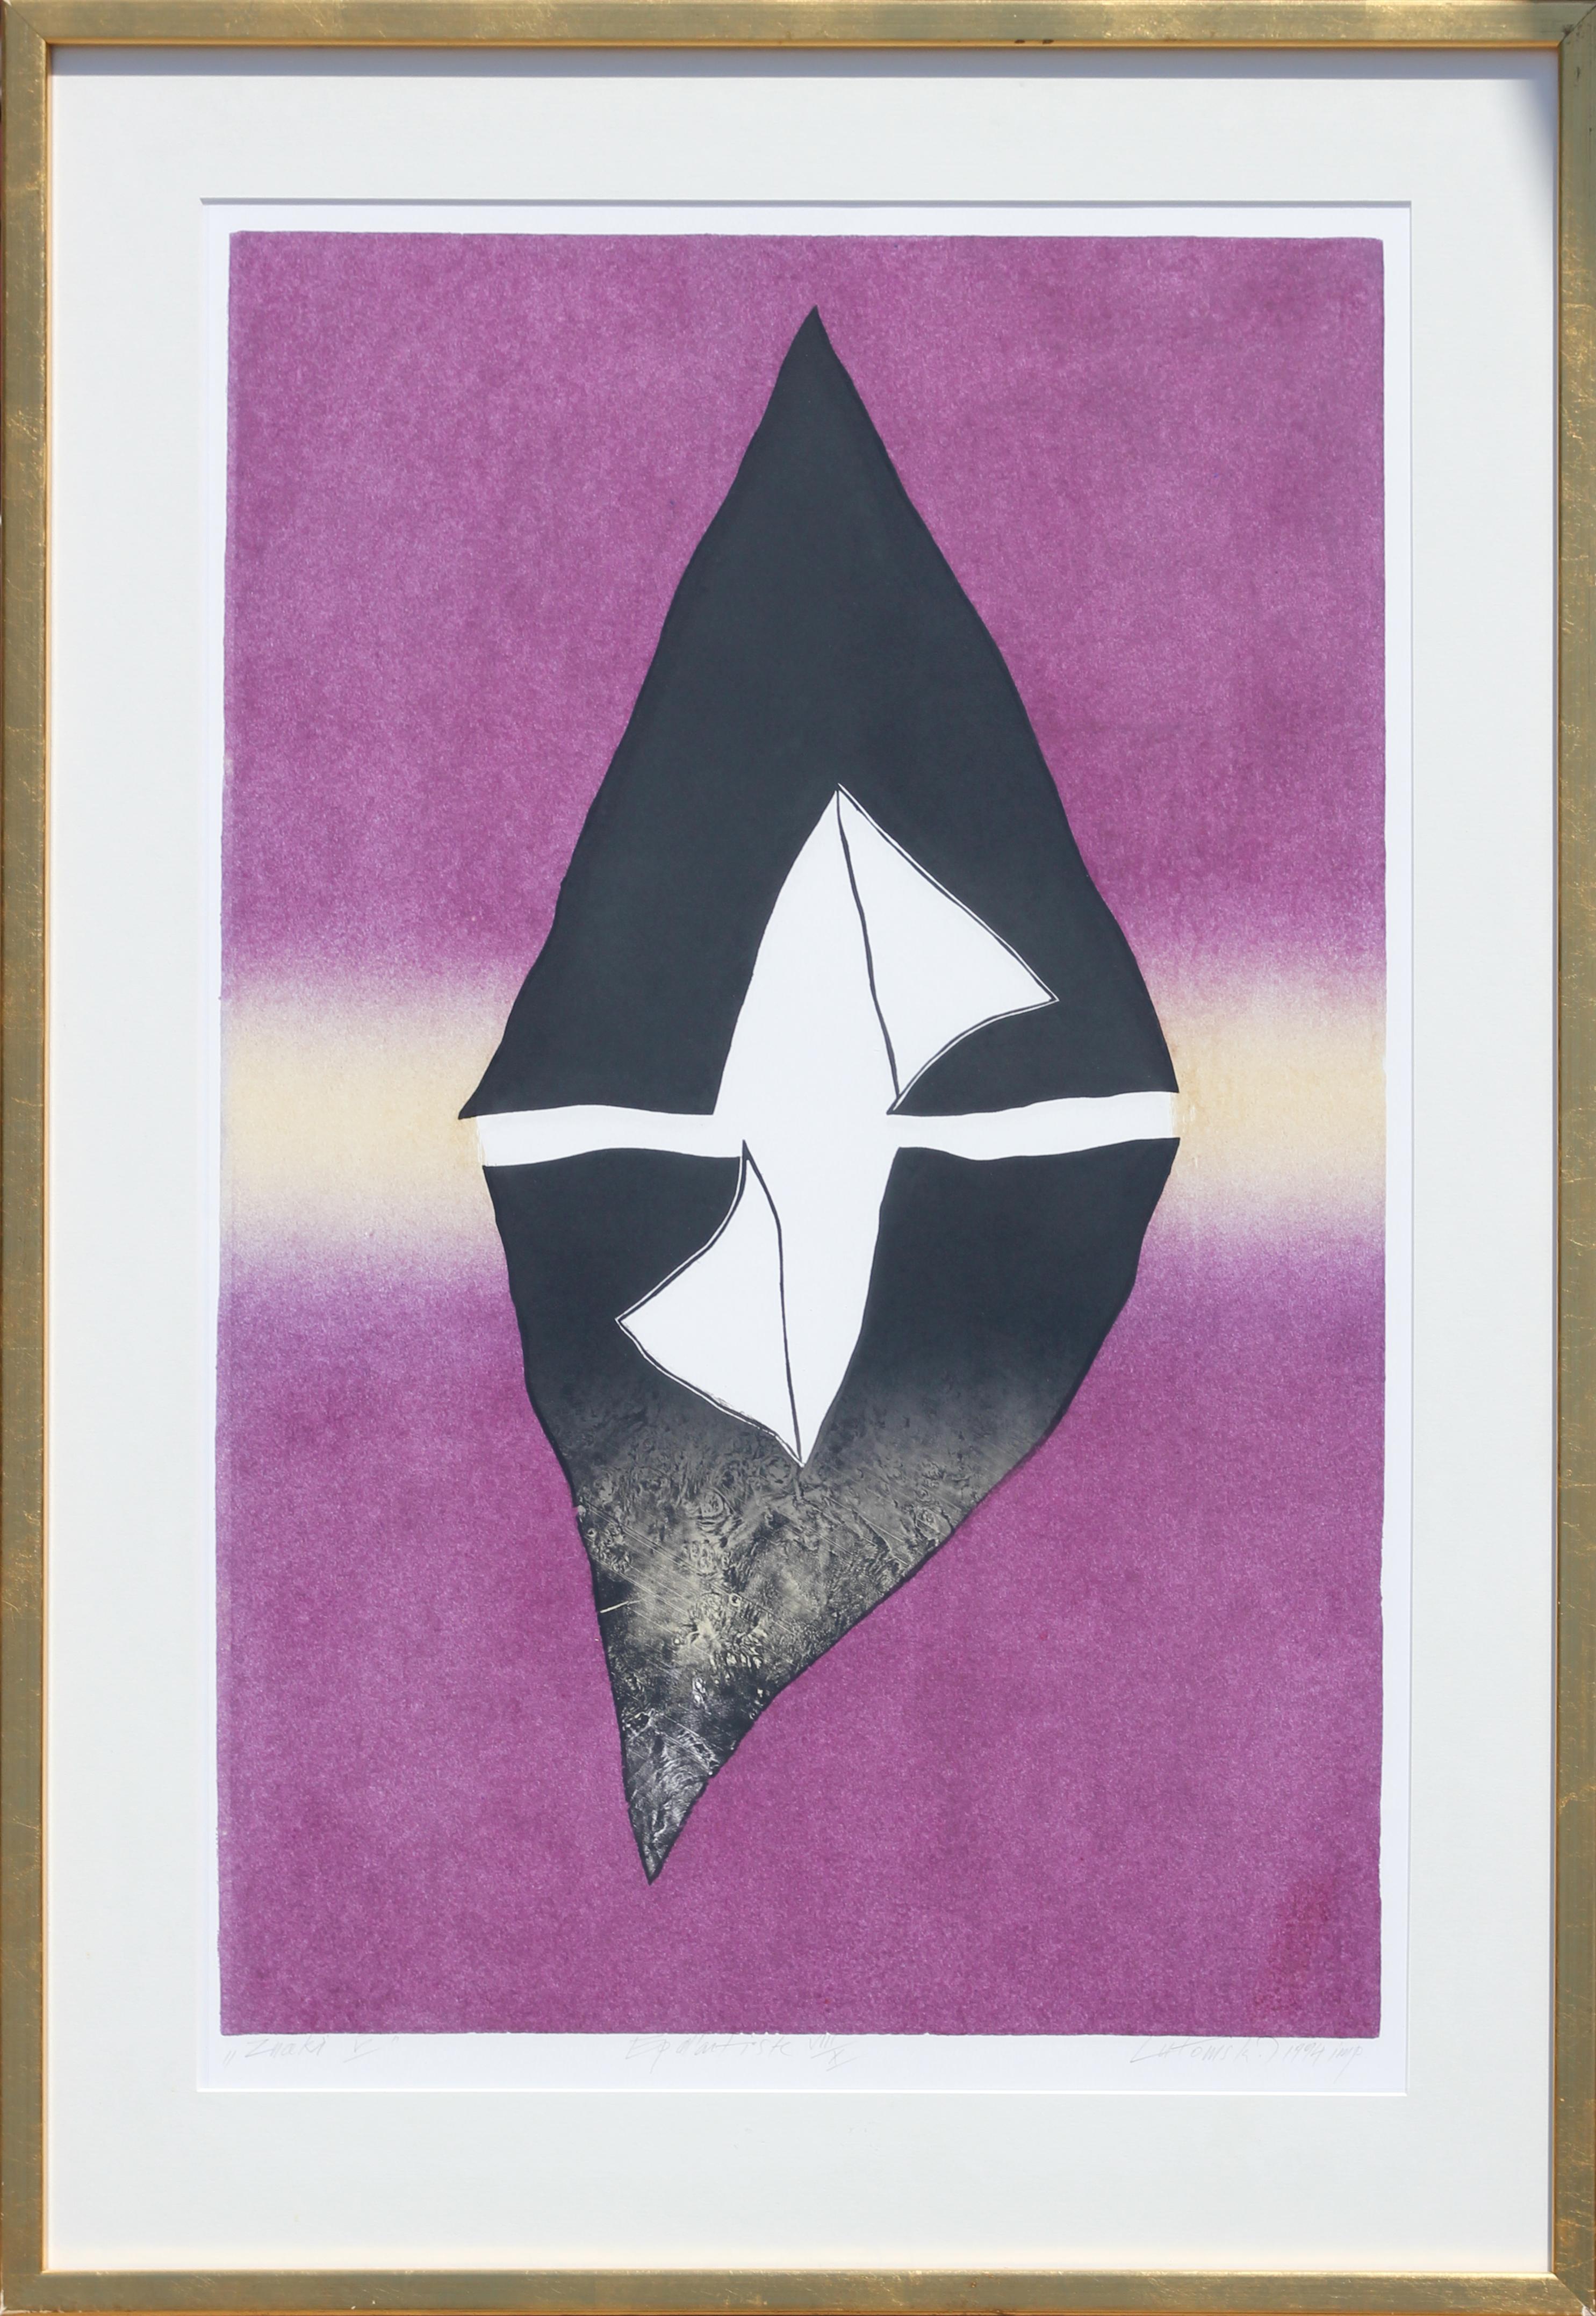 Zbigniew Lutomski Abstract Print - “Signs V” Modern Purple and Black Abstract Geometric Woodcut Print Edition 8/10